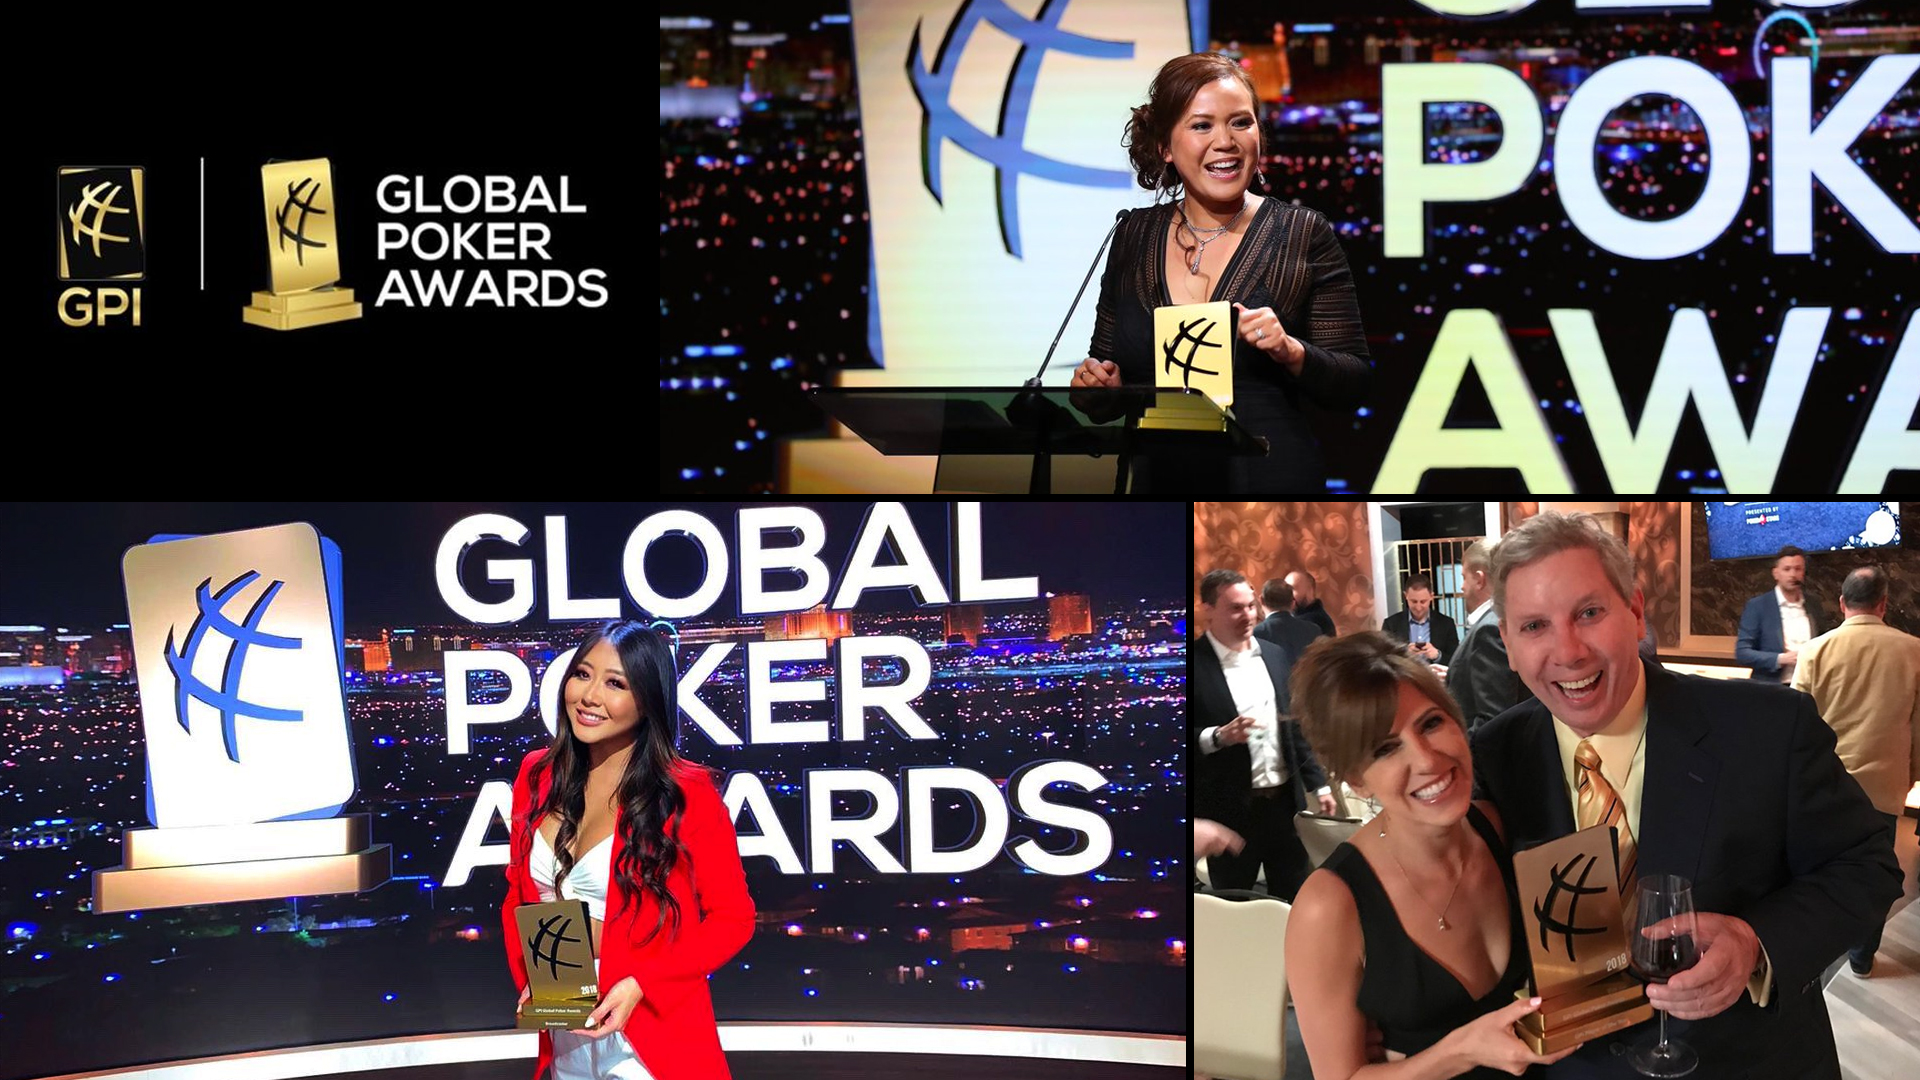 Global Poker Awards – Faits Saillants